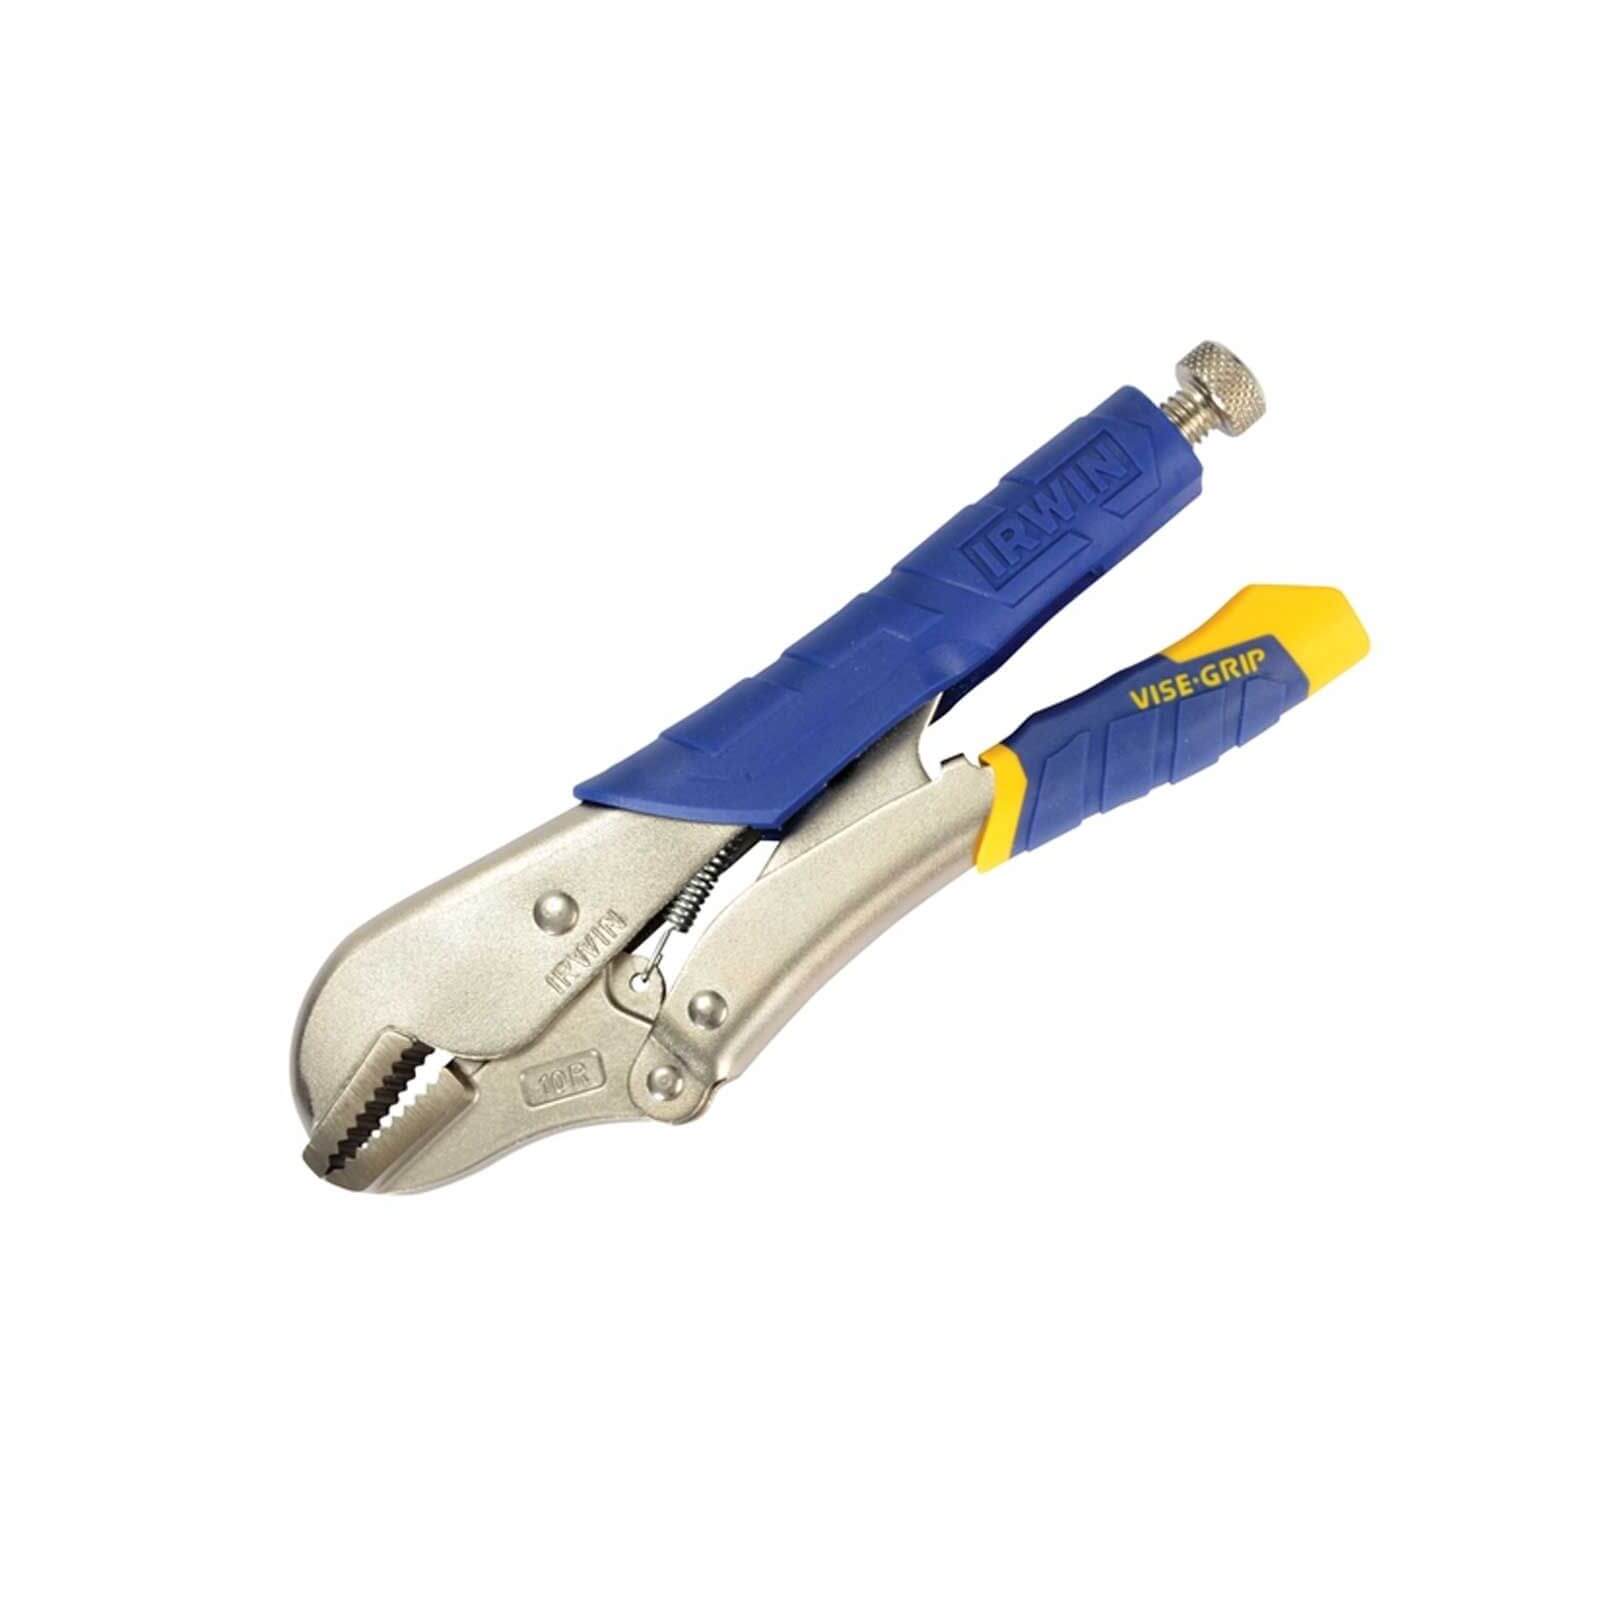 Irwin Vise-Grip Fast Release Locking Plier - 250mm